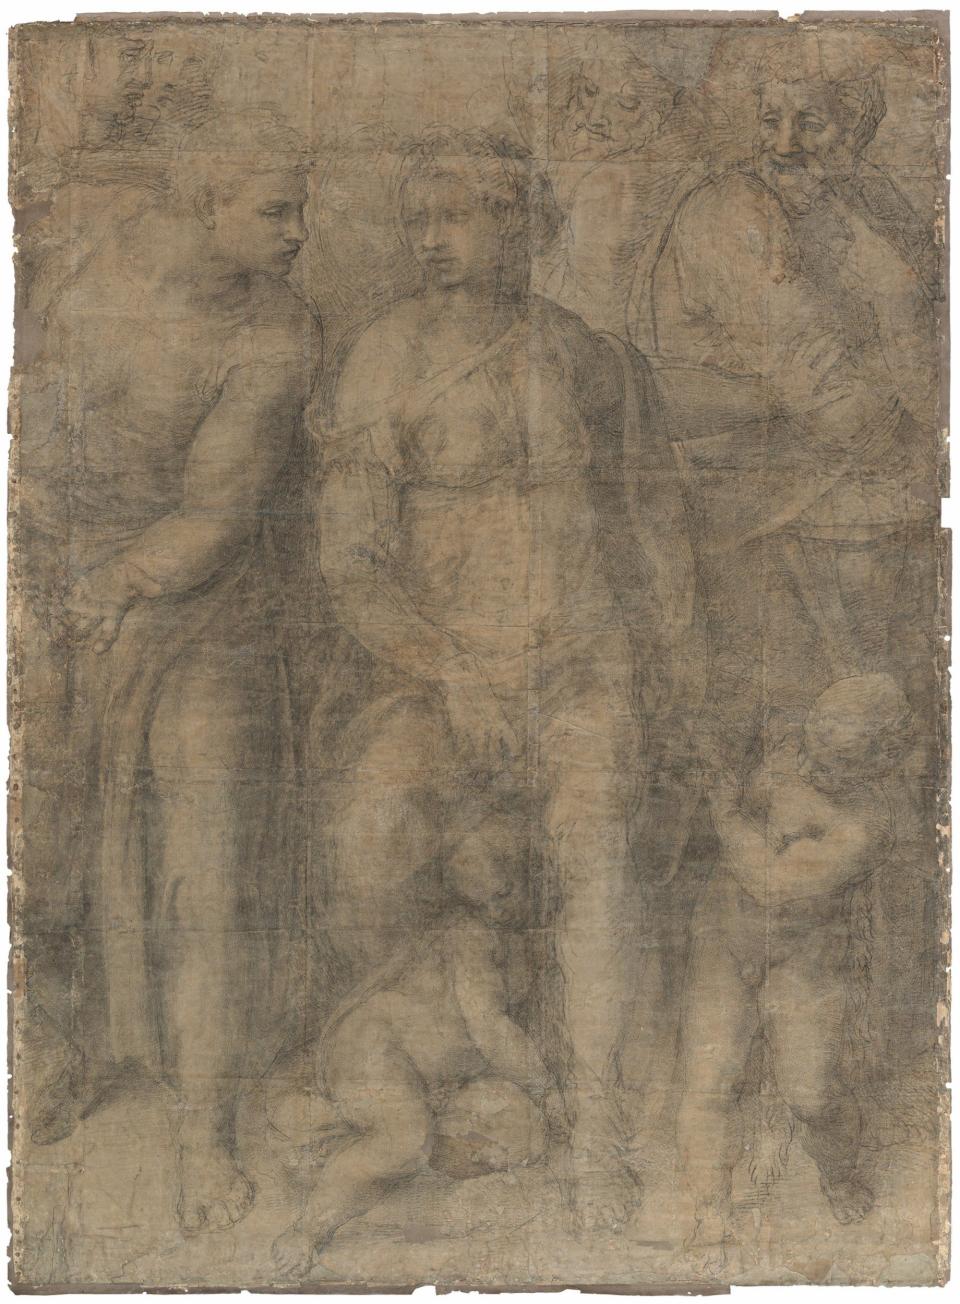 Michelangelo's Epifania